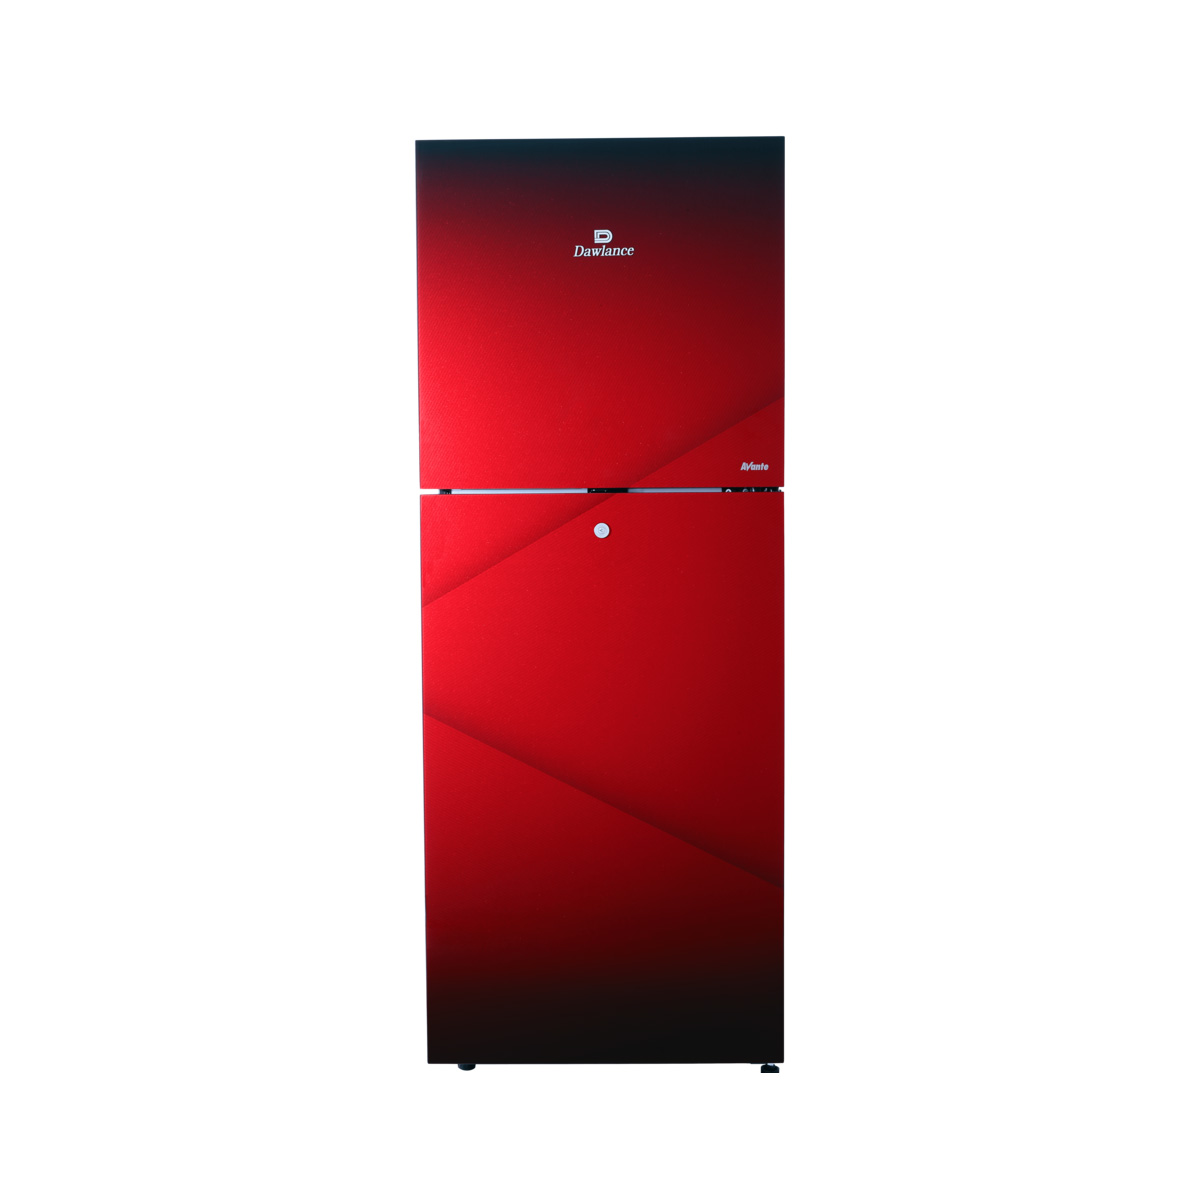 Dawlance 9169WB Avante Refrigerator Pearl Red